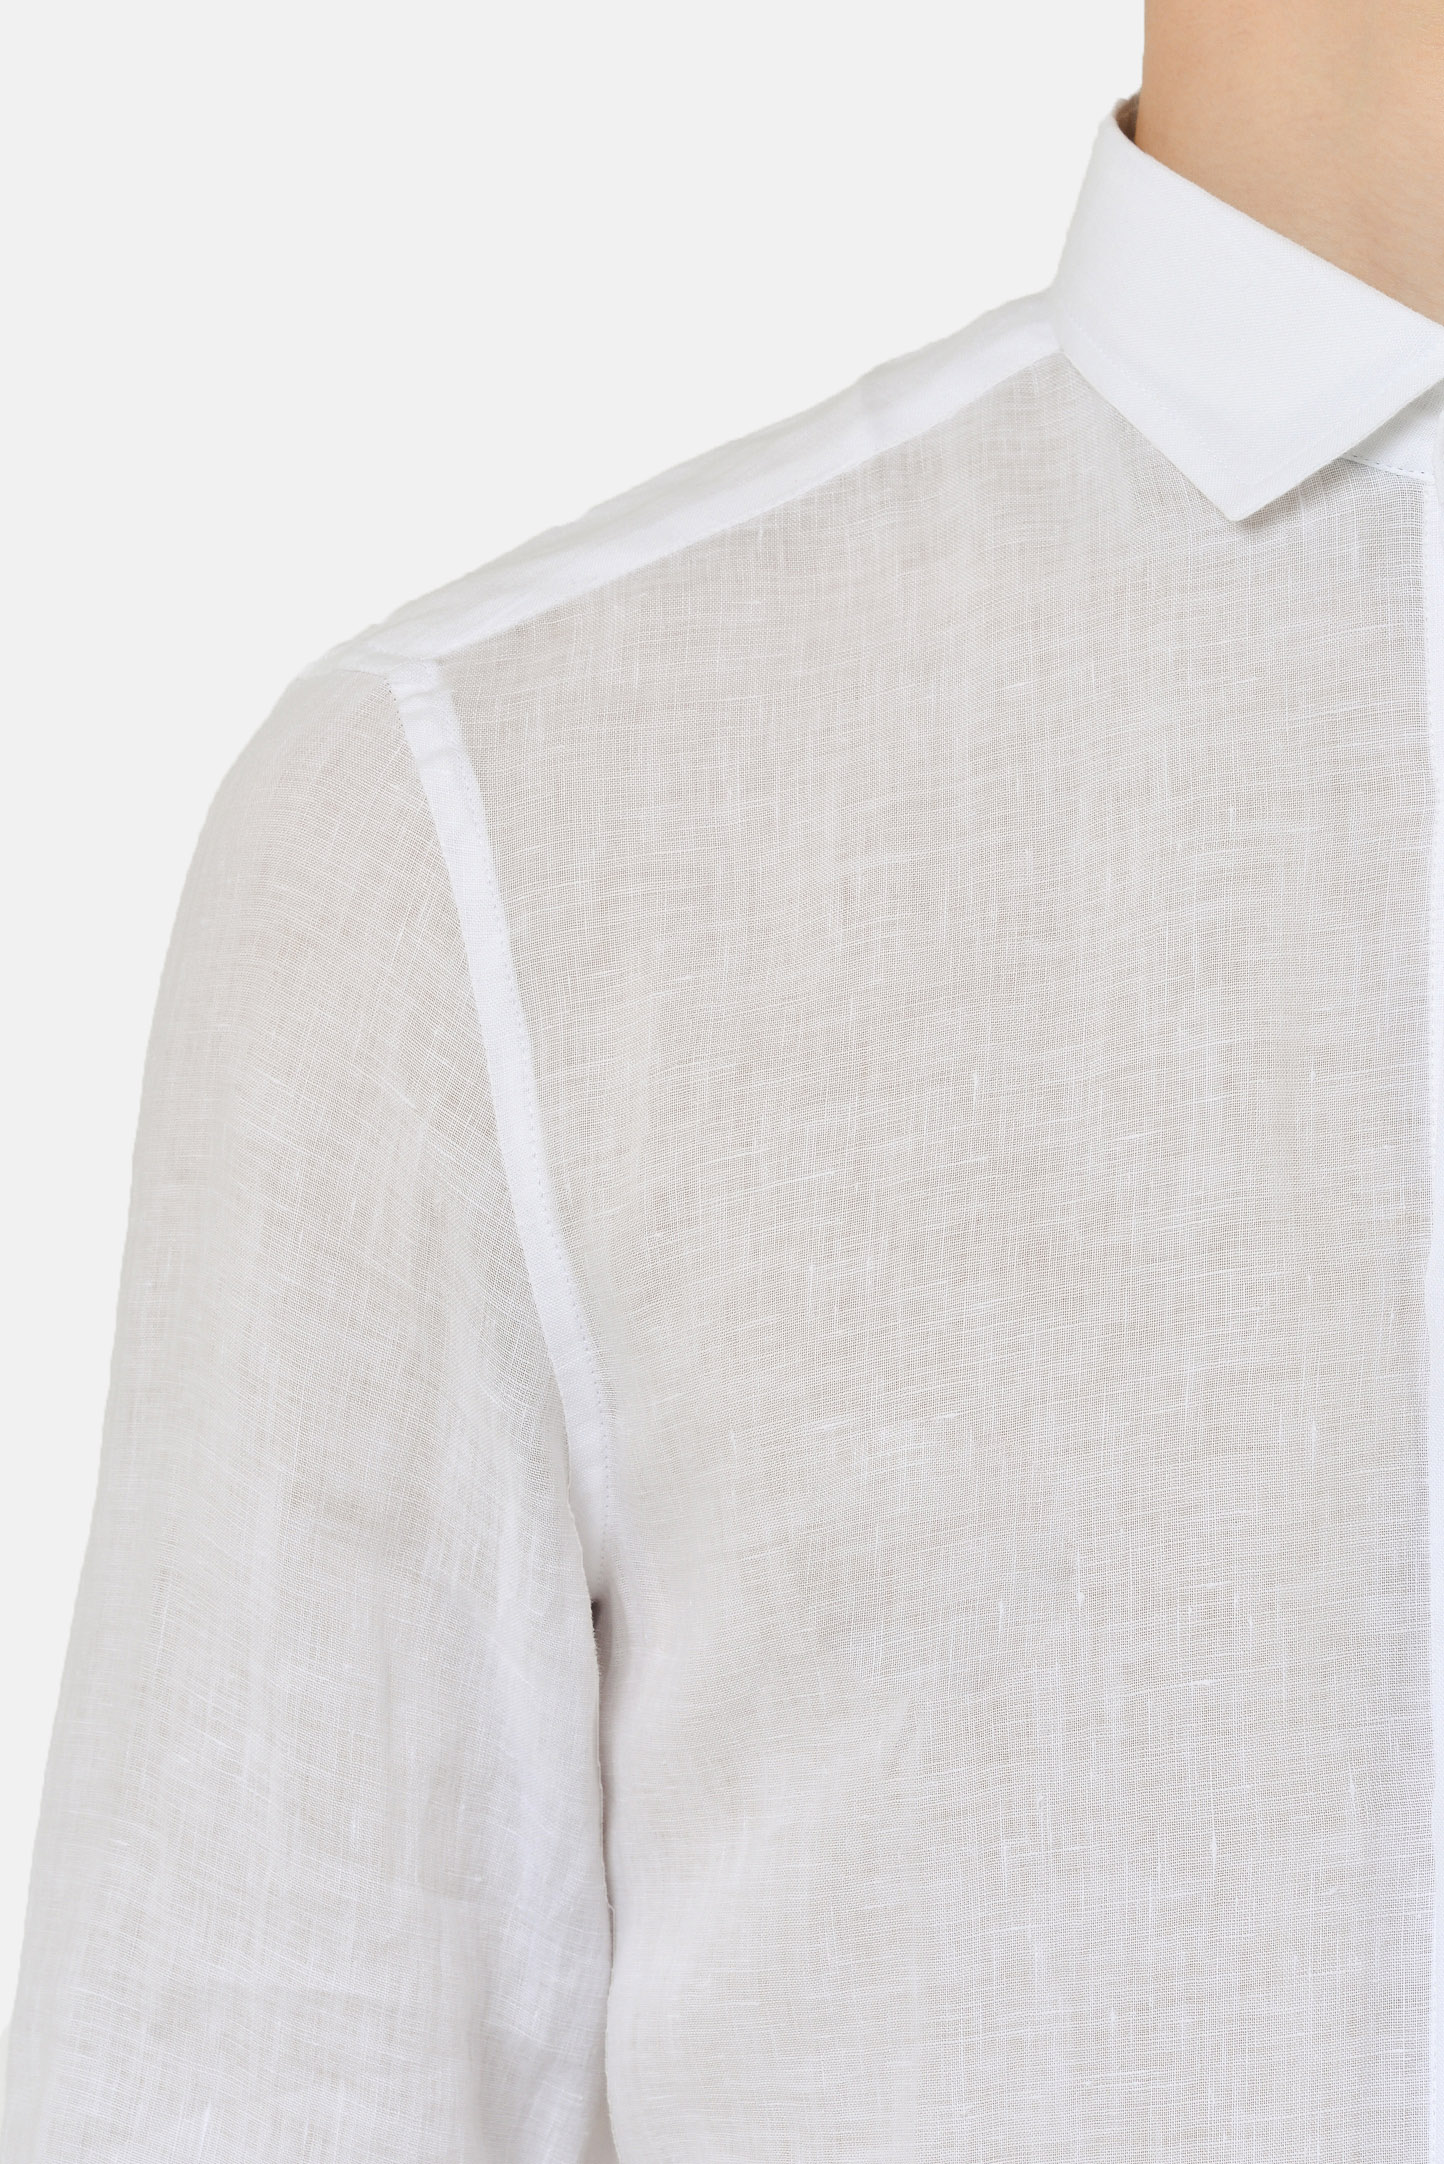 Рубашка BRUNELLO  CUCINELLI MB6083029, цвет: Белый, Мужской